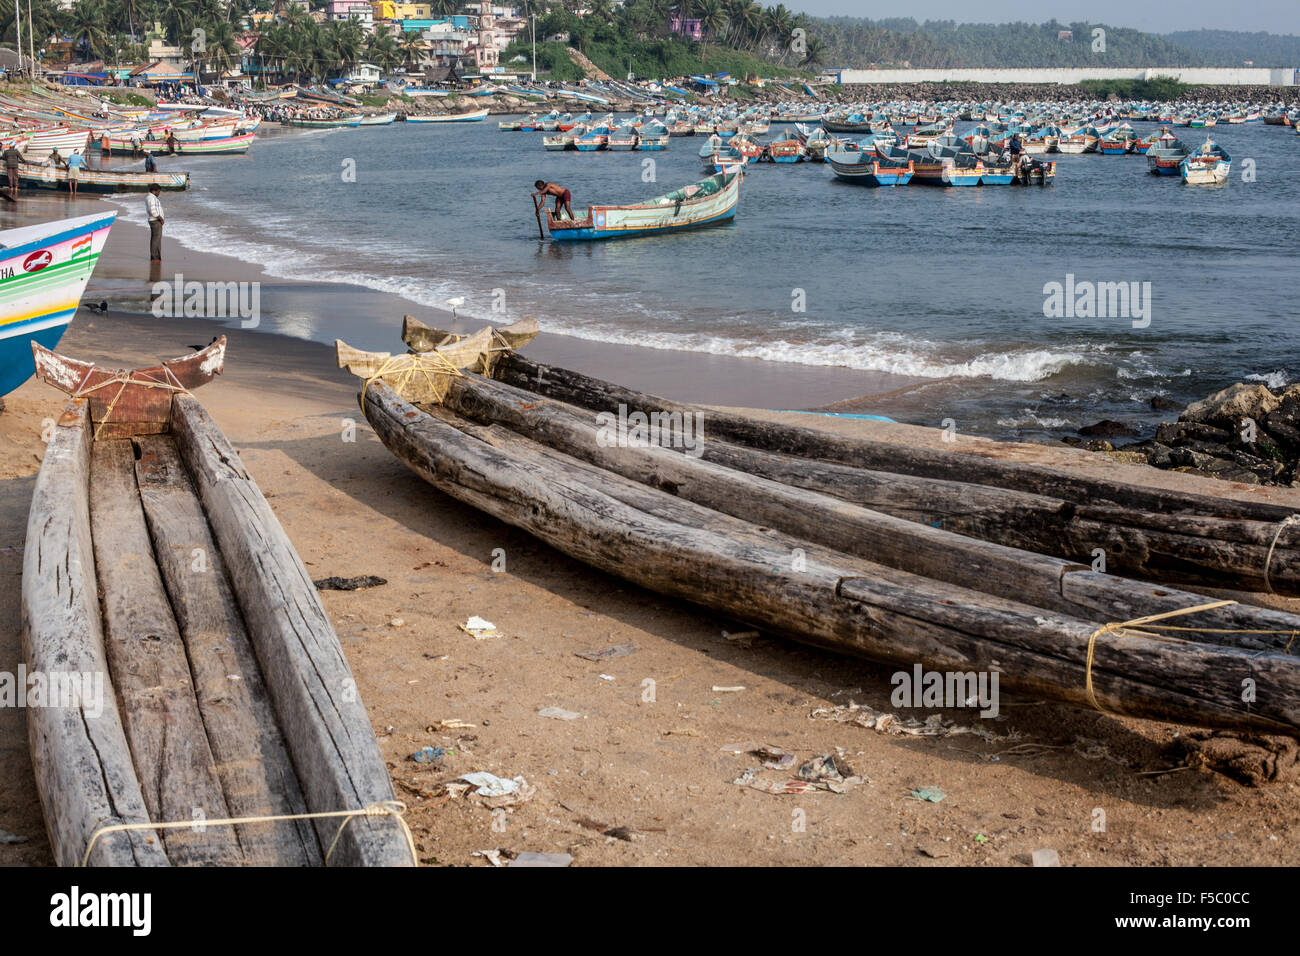 Vizhinjam Christian fisherman village in Kerala, India, November 2014. There are hundreds of boats on the beach. Stock Photo